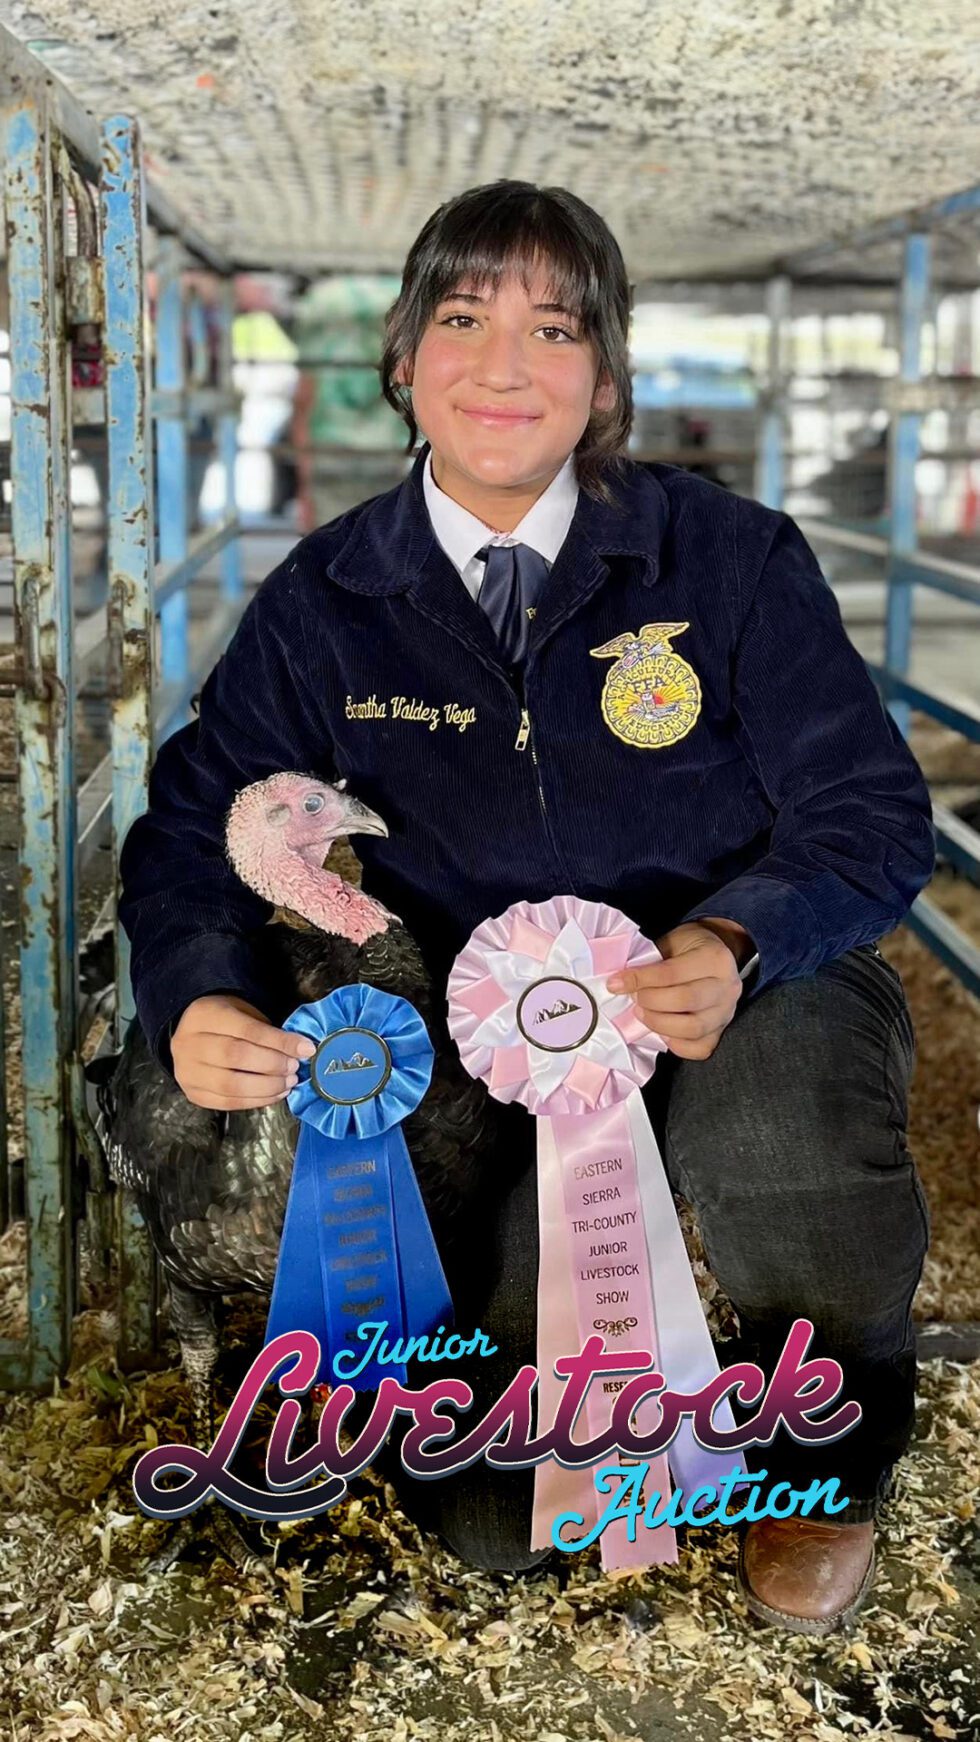 Junior Livestock Auction Tri County Fair CA